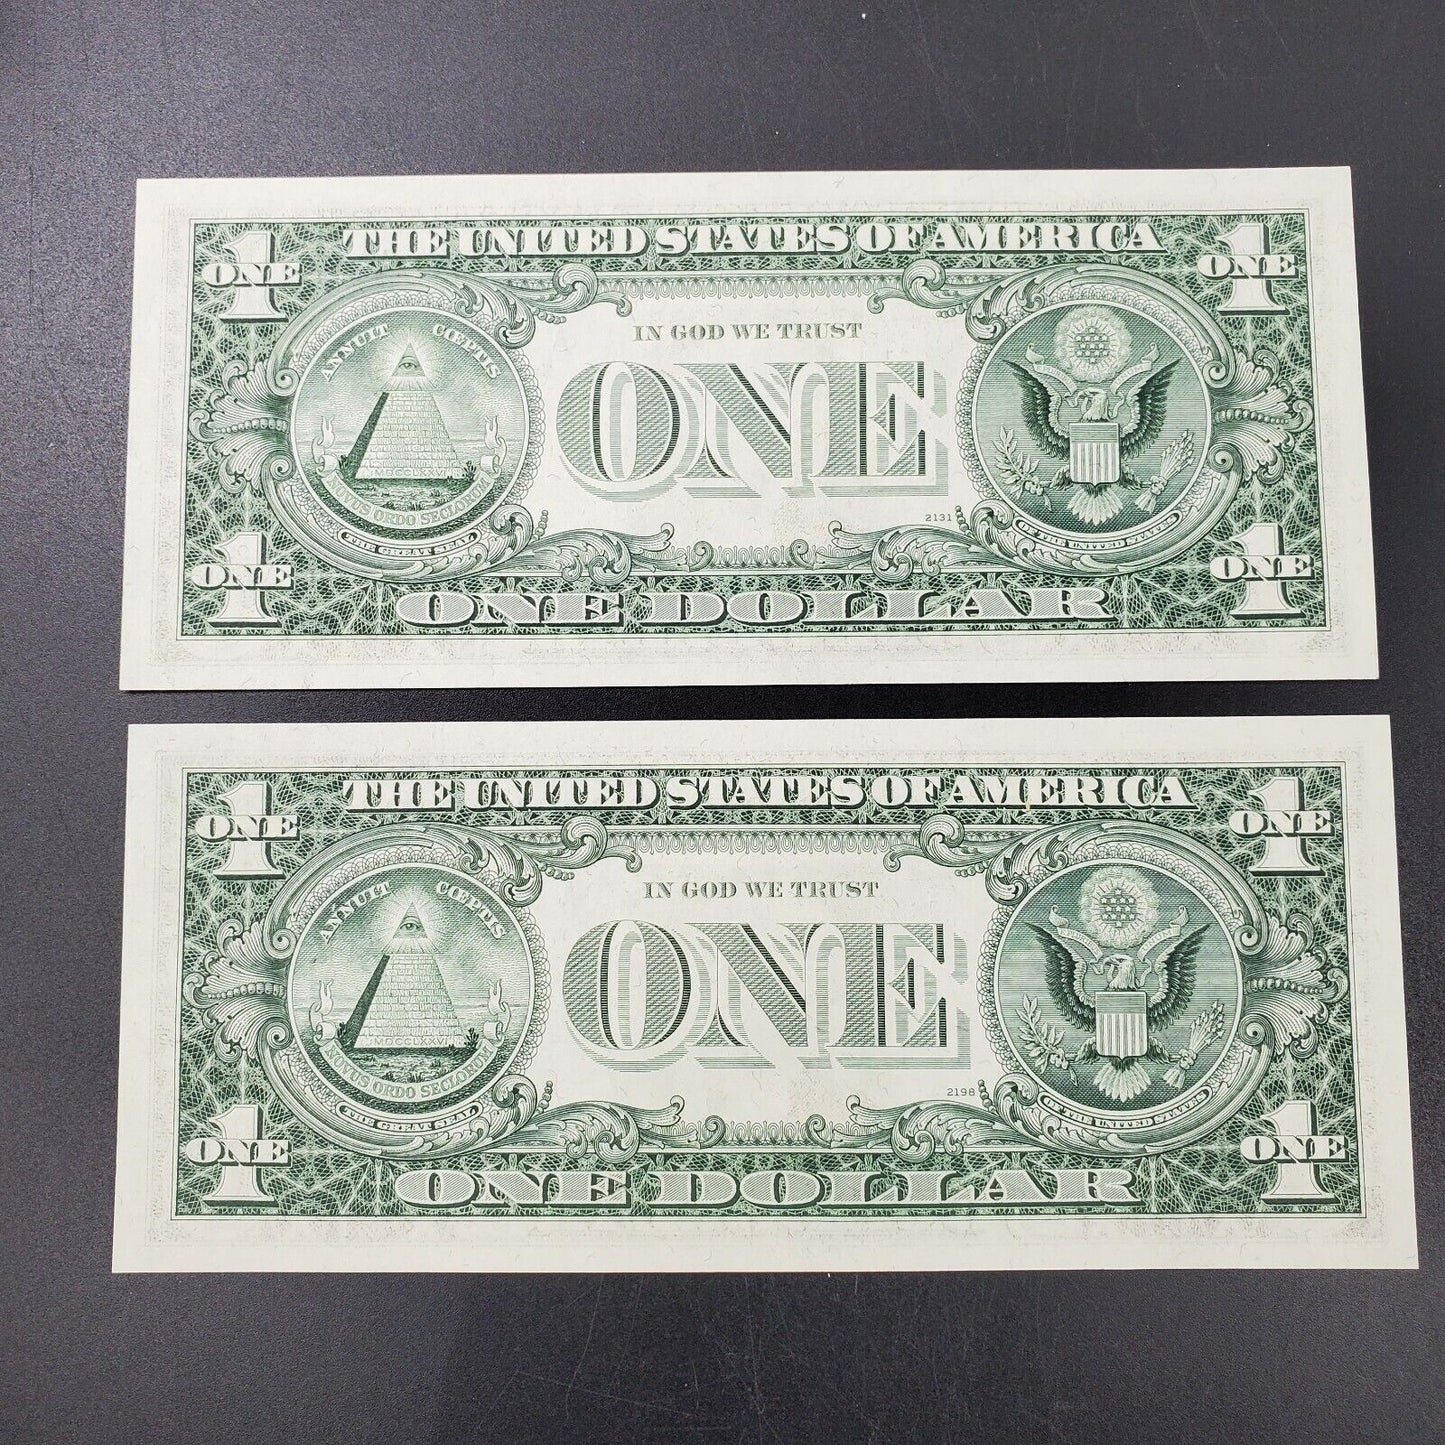 2 CONSECUTIVE 1977 $1 FRN Federal Reserve Note Bill CH UNC Boston District